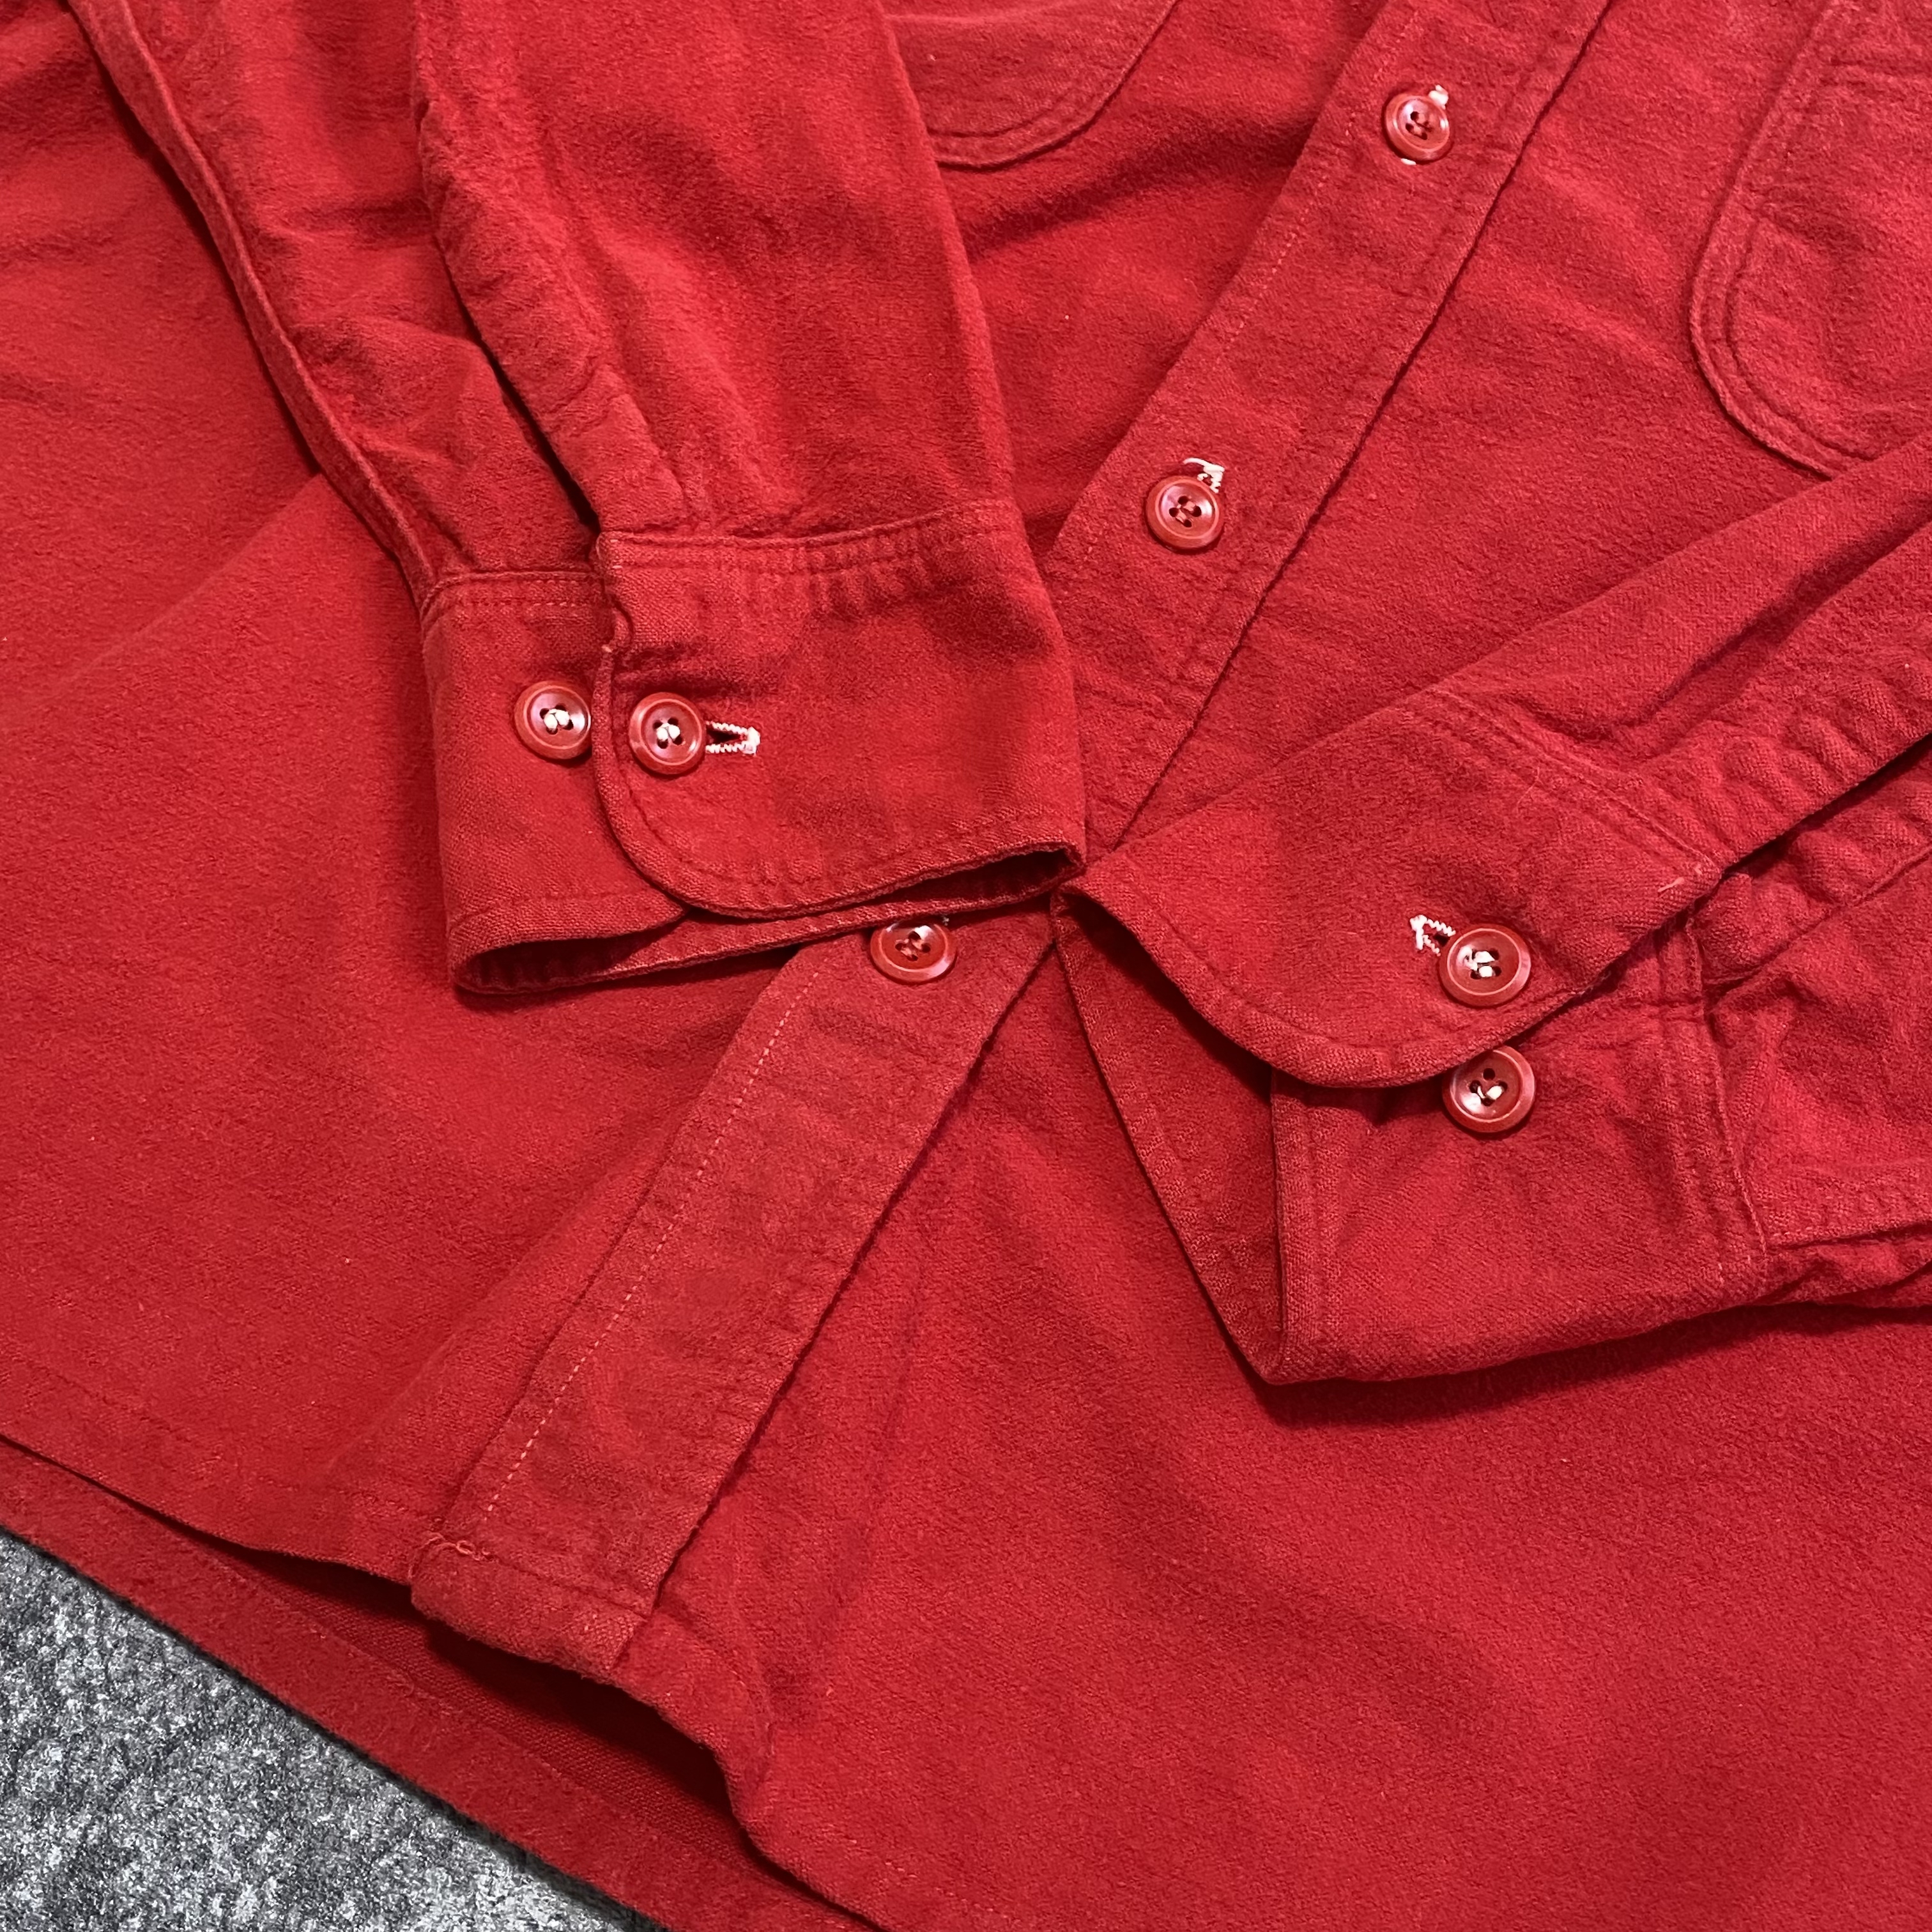 Vintage 1950s PENNEYS Chamois Cotton Shirt ペニーズ シャモアクロス